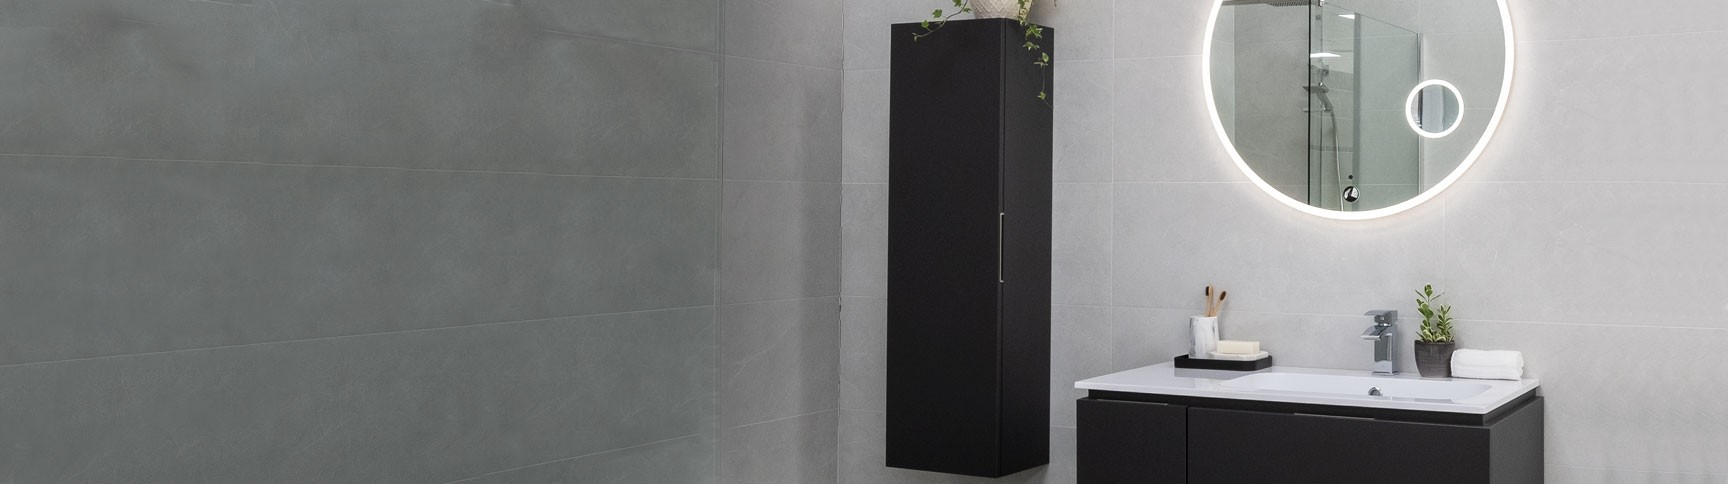 Bathroom Storage Units | Bathroom Storage Ideas | World of Tiles